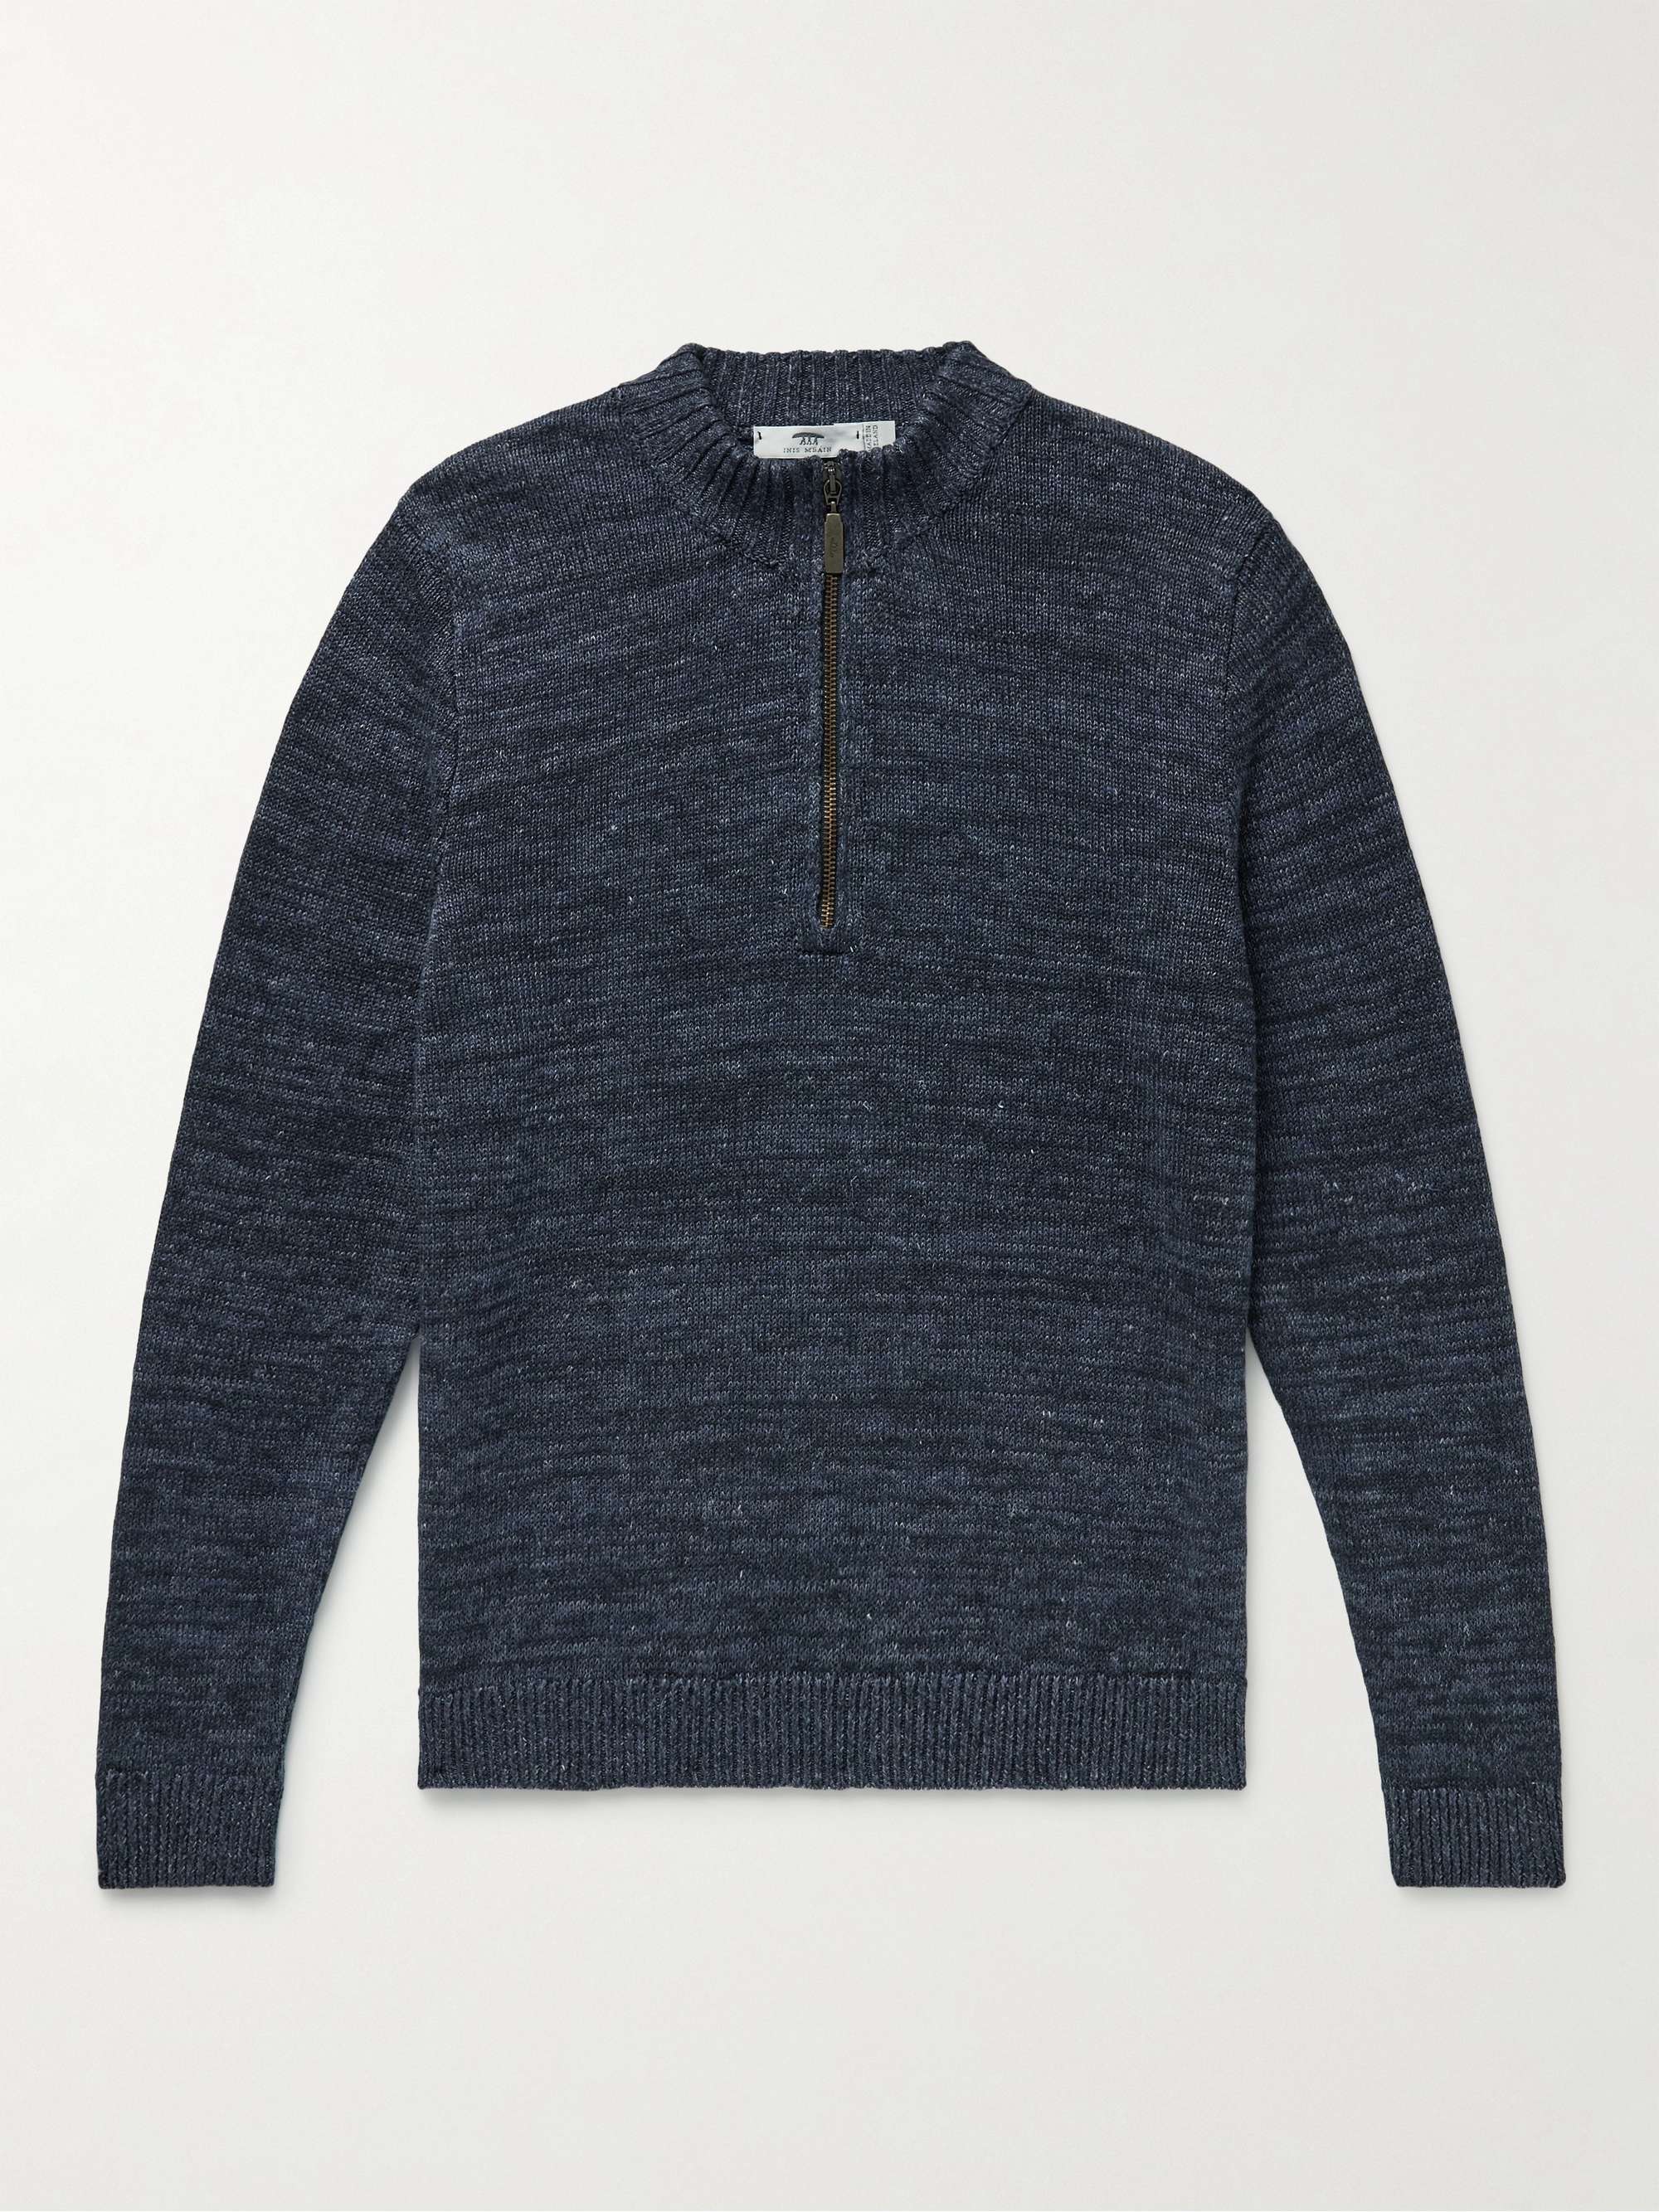 INIS MEÁIN Donegal Linen Half-Zip Sweater